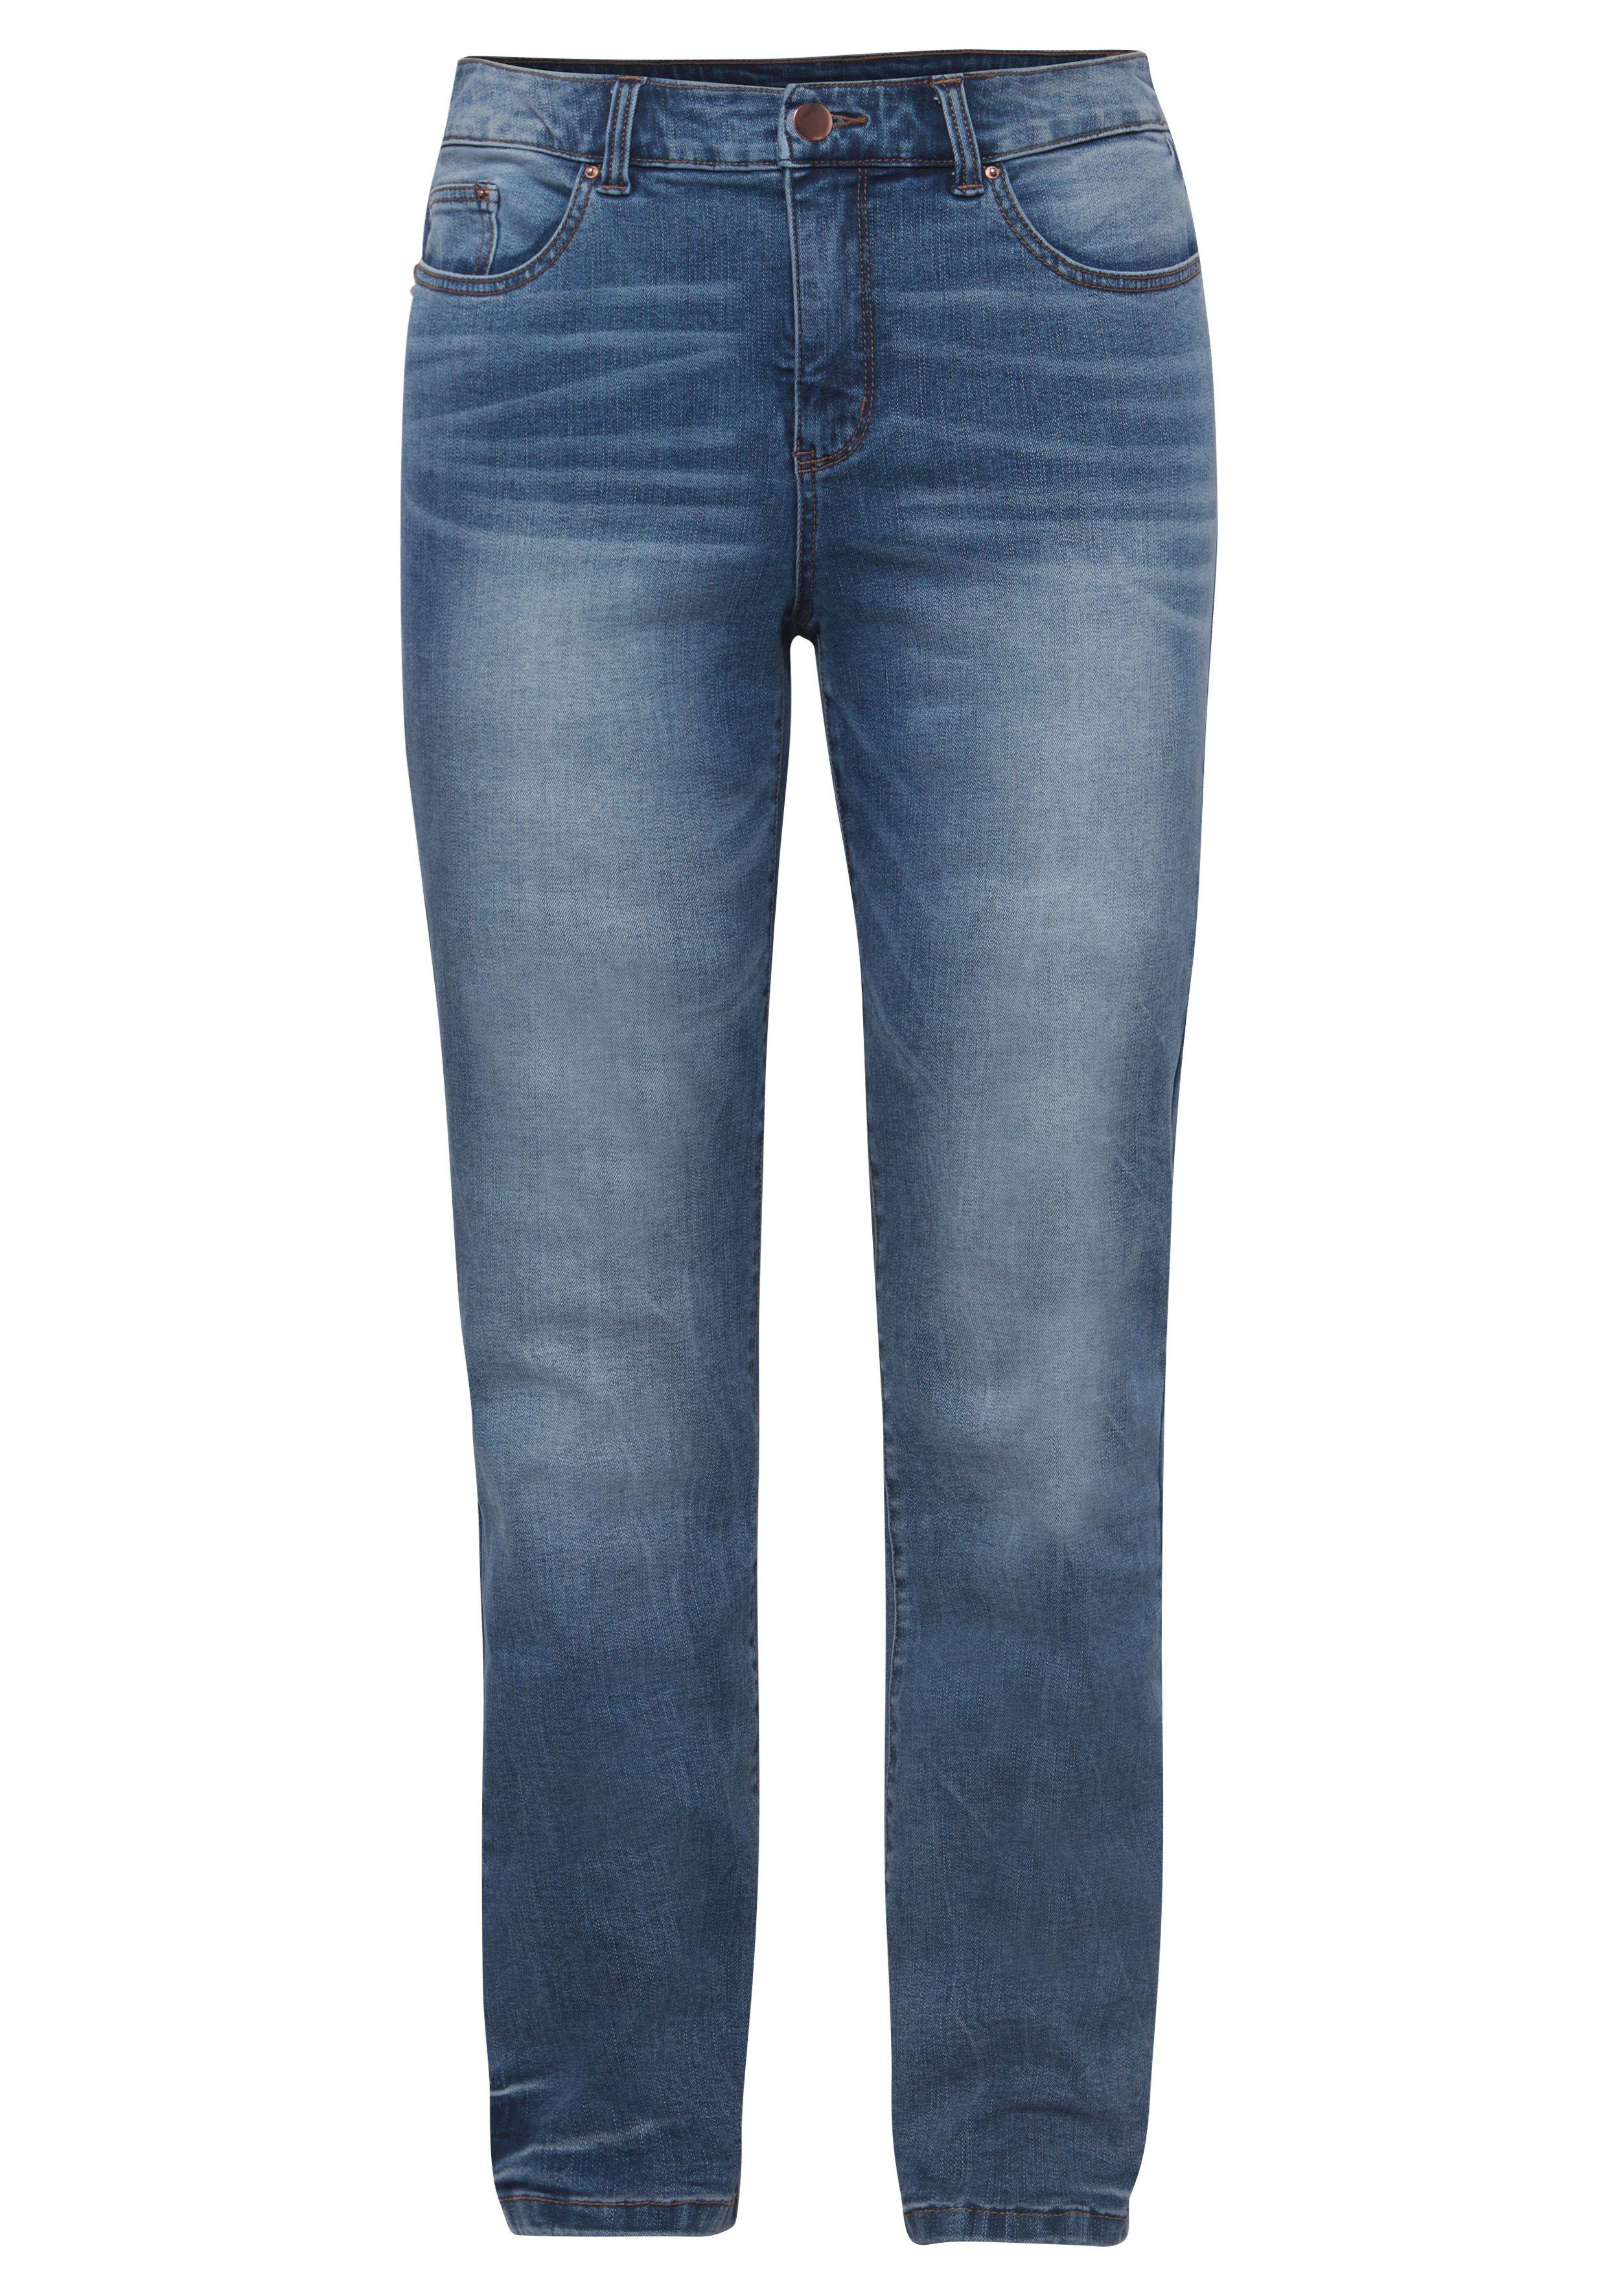 Gerade Stretch-Jeans Denim blue sheego | Bodyforming-Effekt - mit